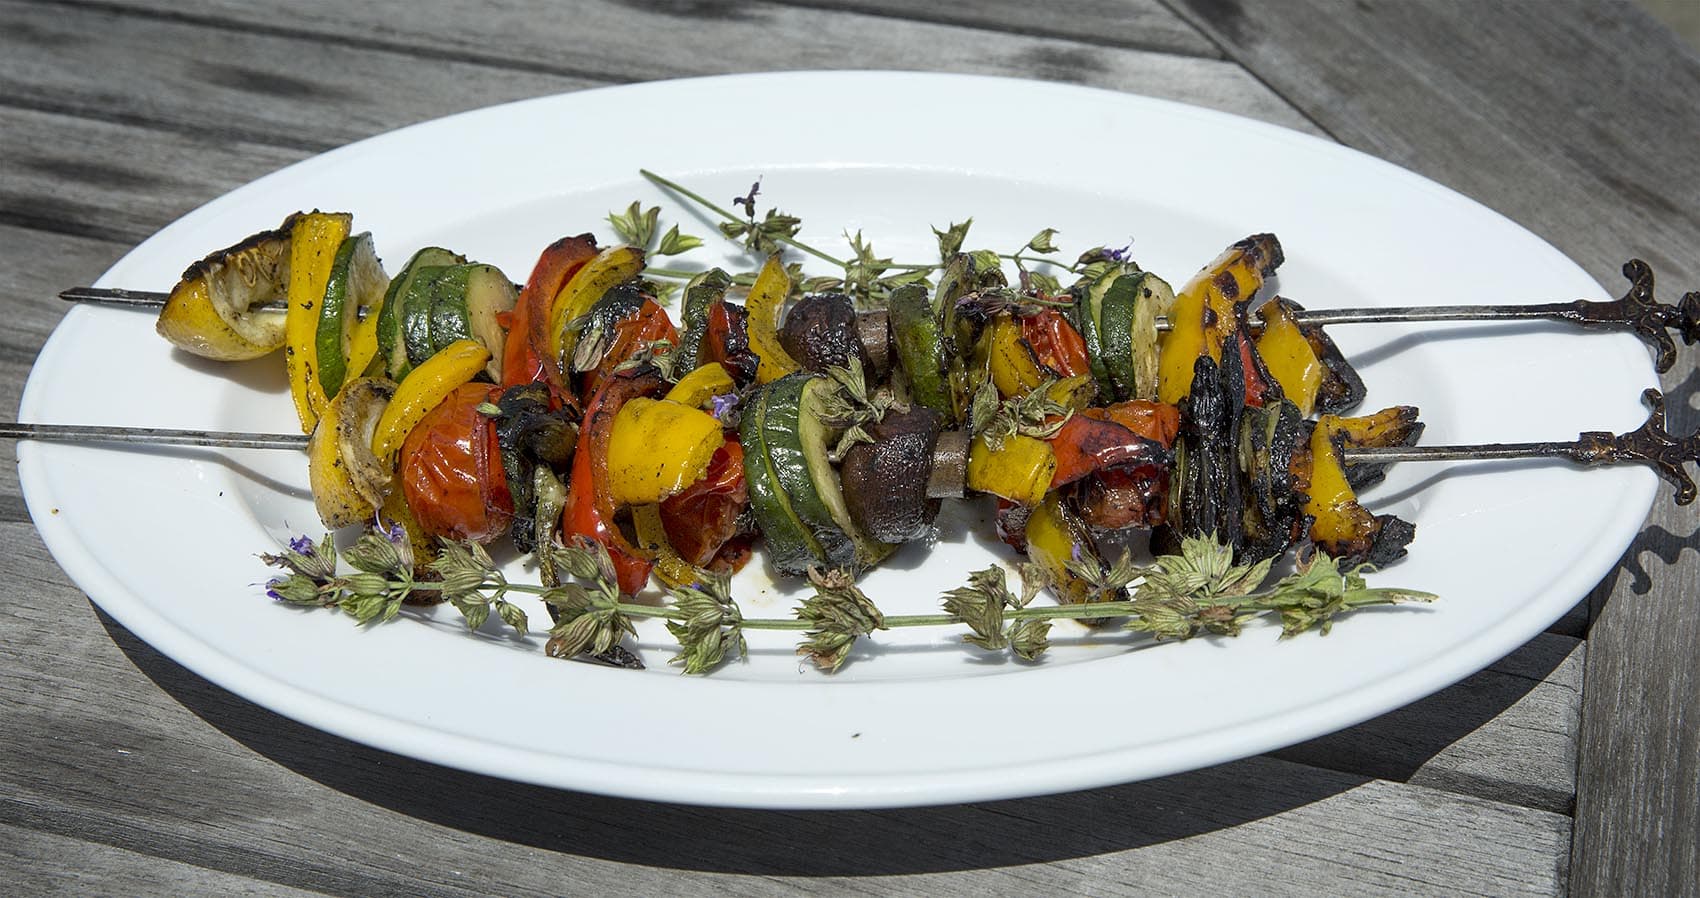 Kathy's grilled vegetable kebabs with chimichurri sauce. (Robin Lubbock/WBUR)